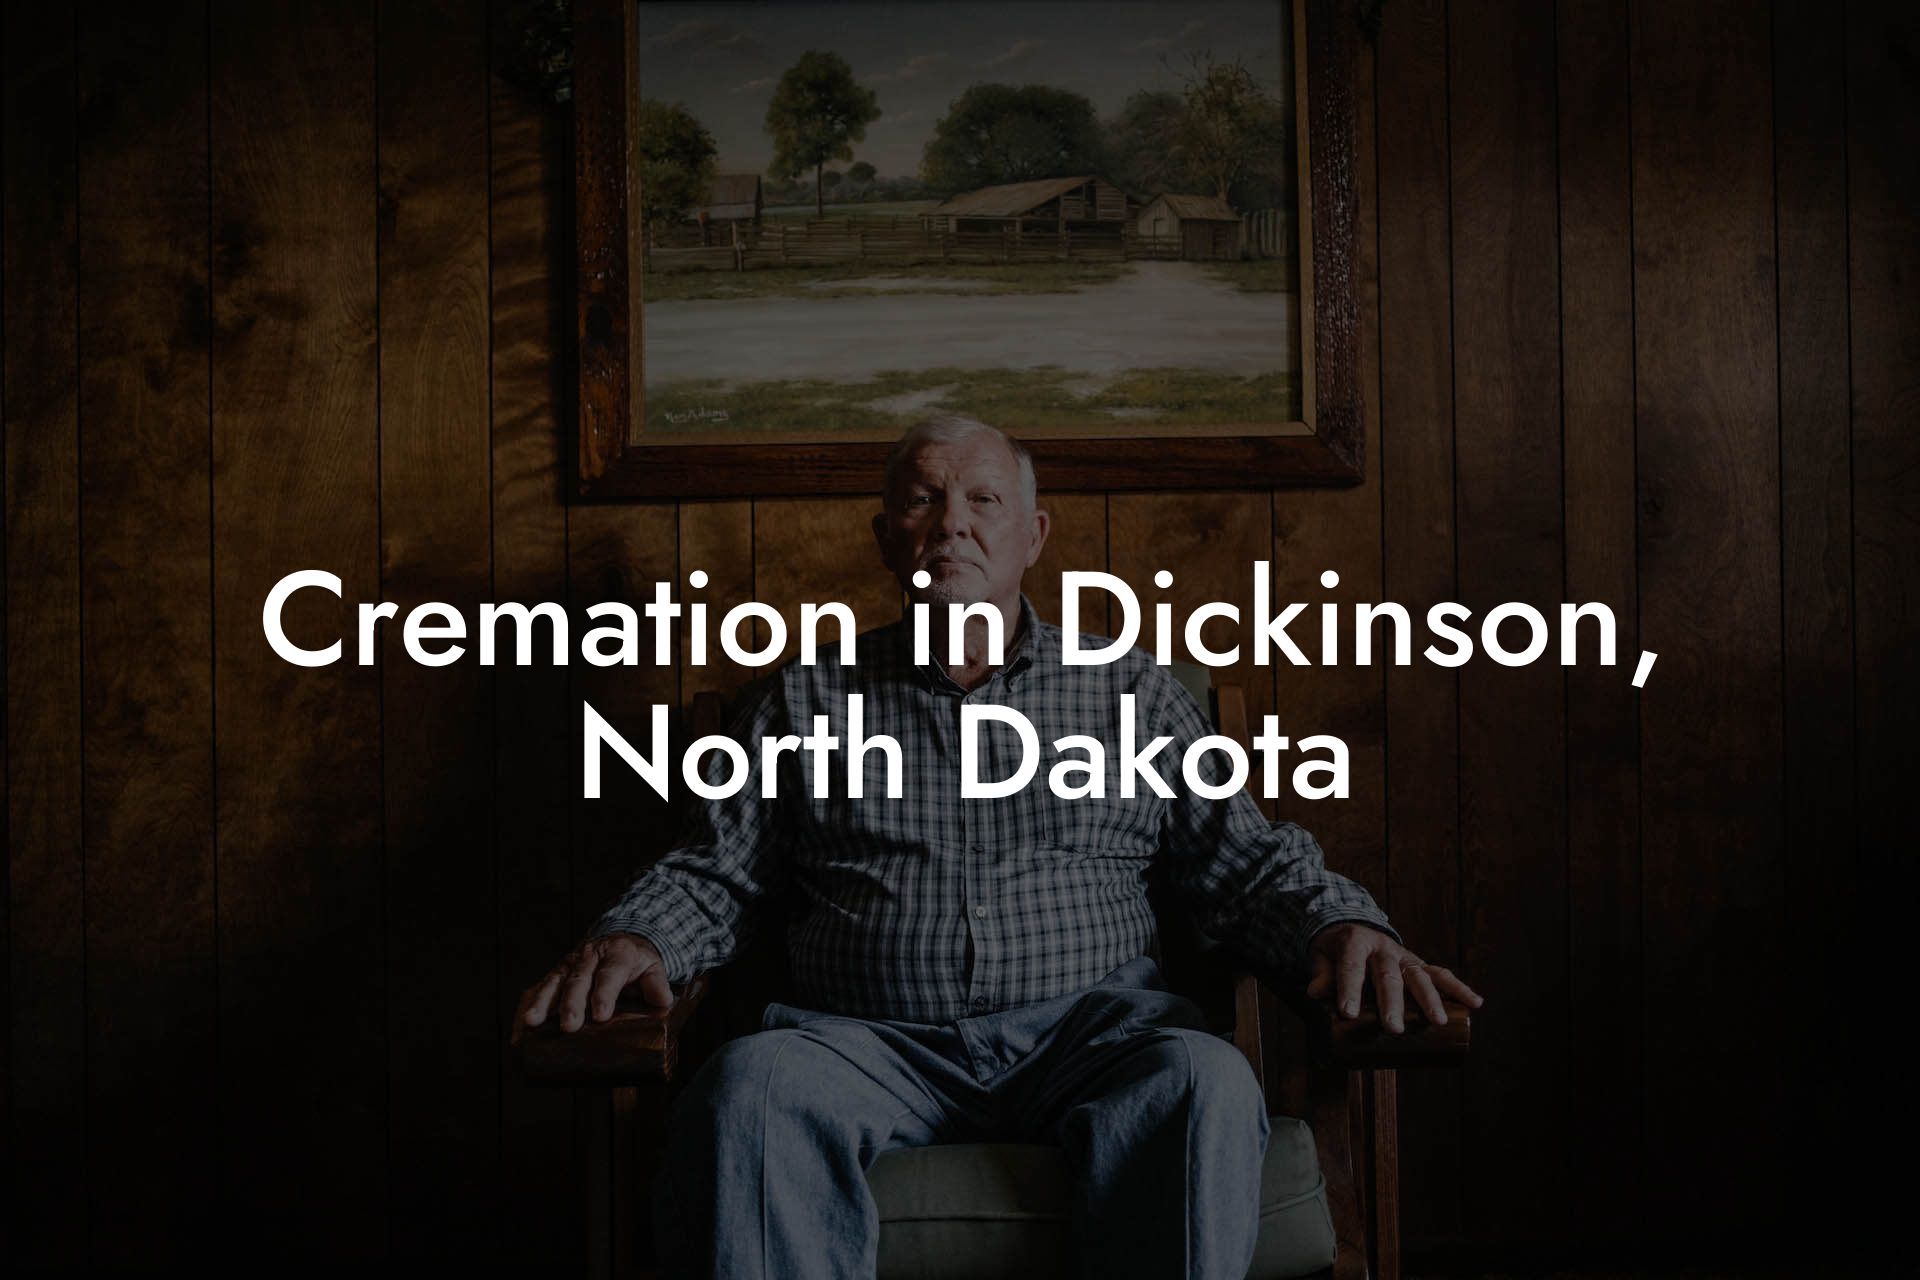 Cremation in Dickinson, North Dakota